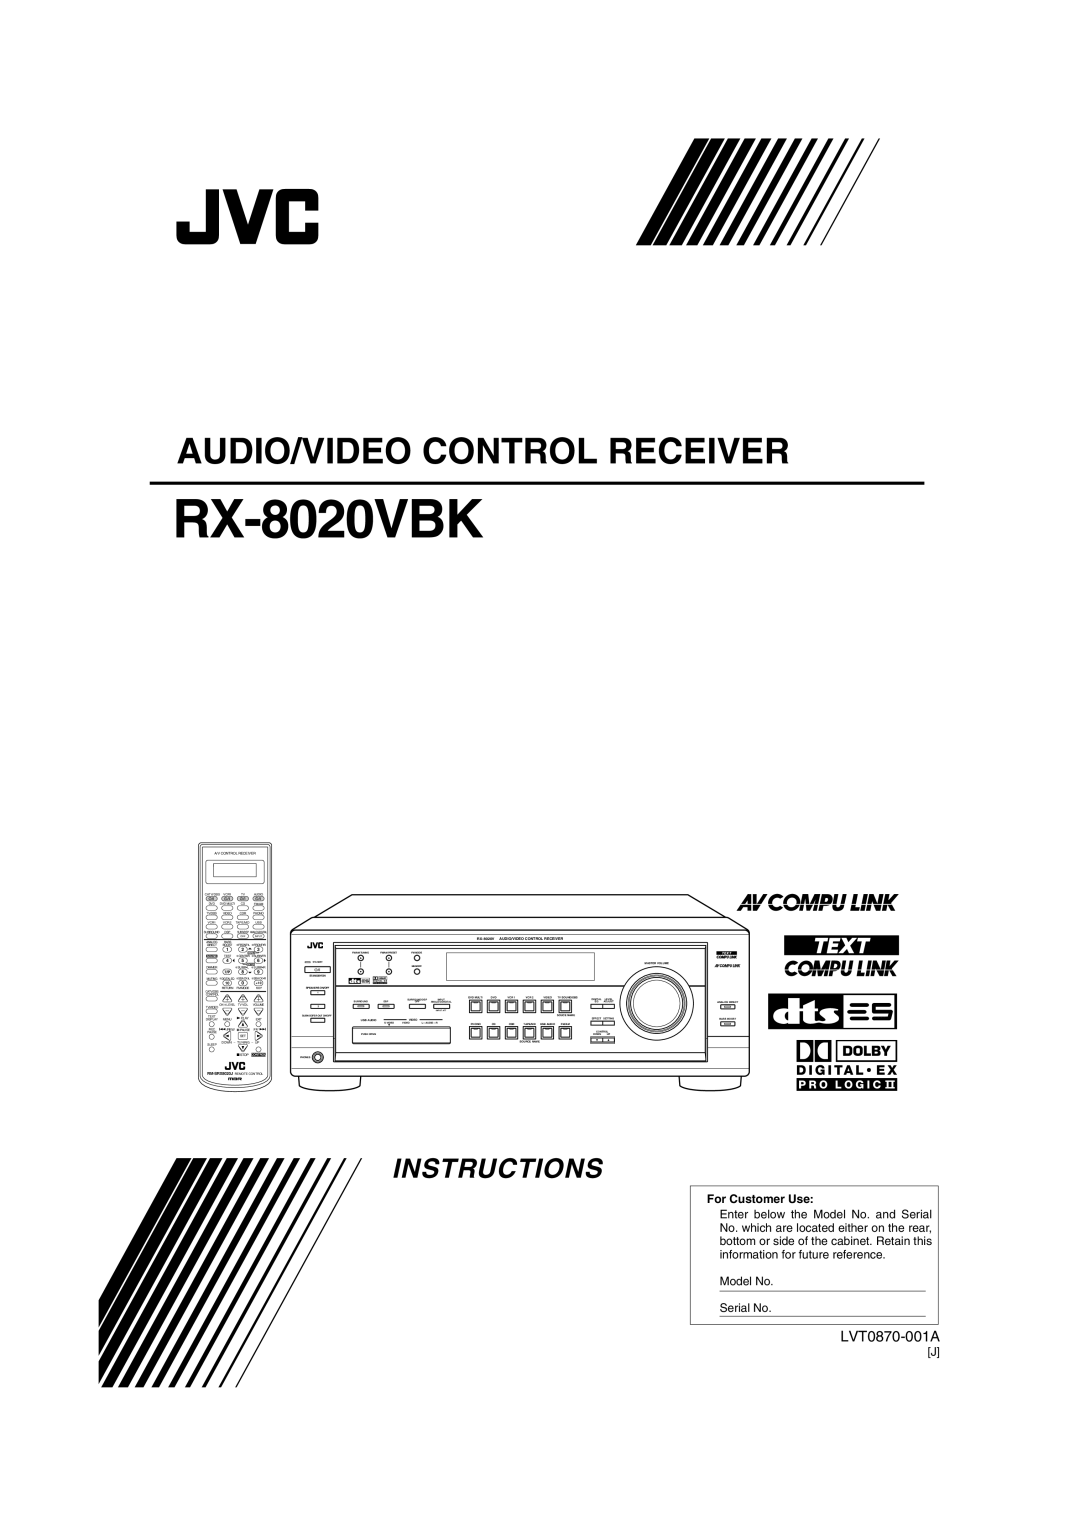 JVC RX-8020VBK manual Audio/Video Control Receiver, Instructions, LVT0870-001A, For Customer Use, Stop Control, Menu 